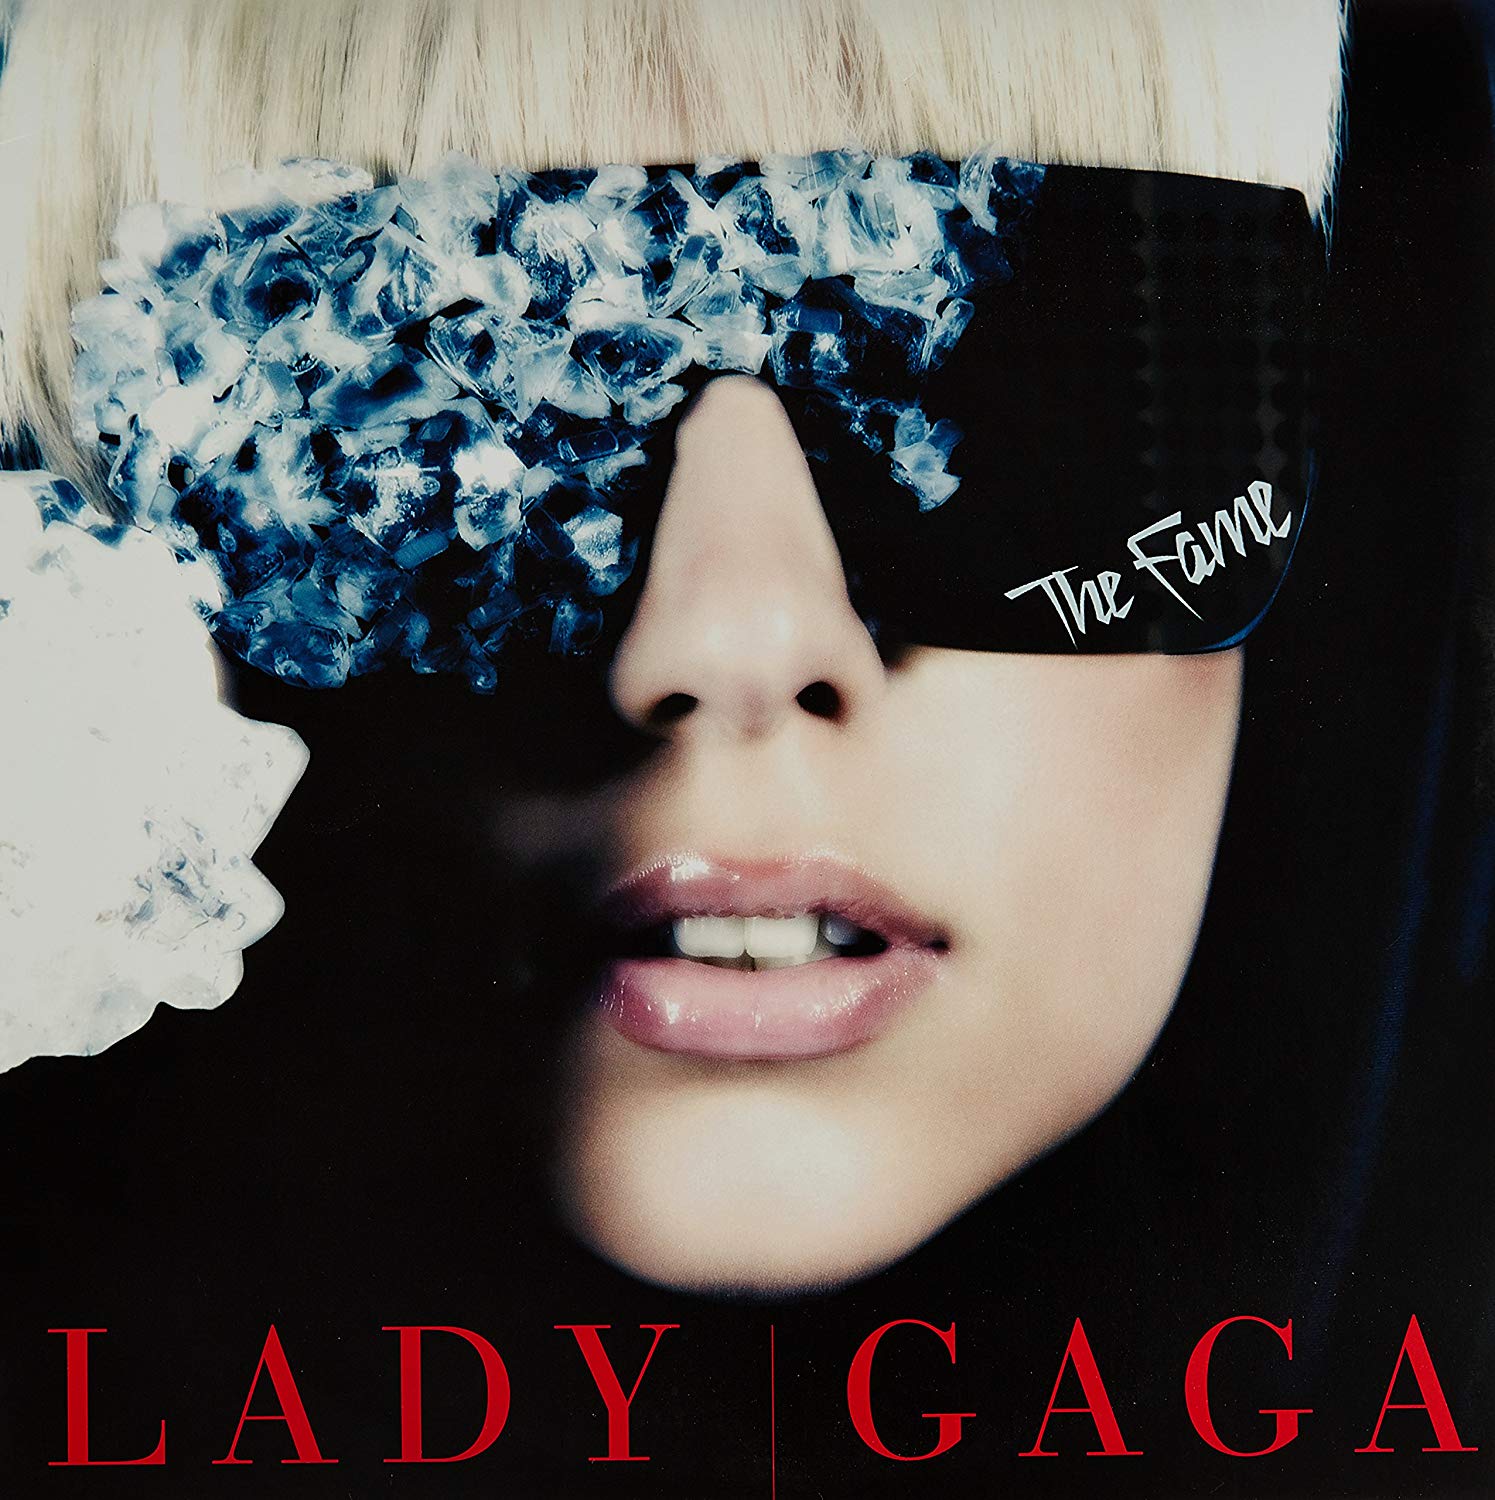 Lady Gaga’s ‘The Fame’ turns 10